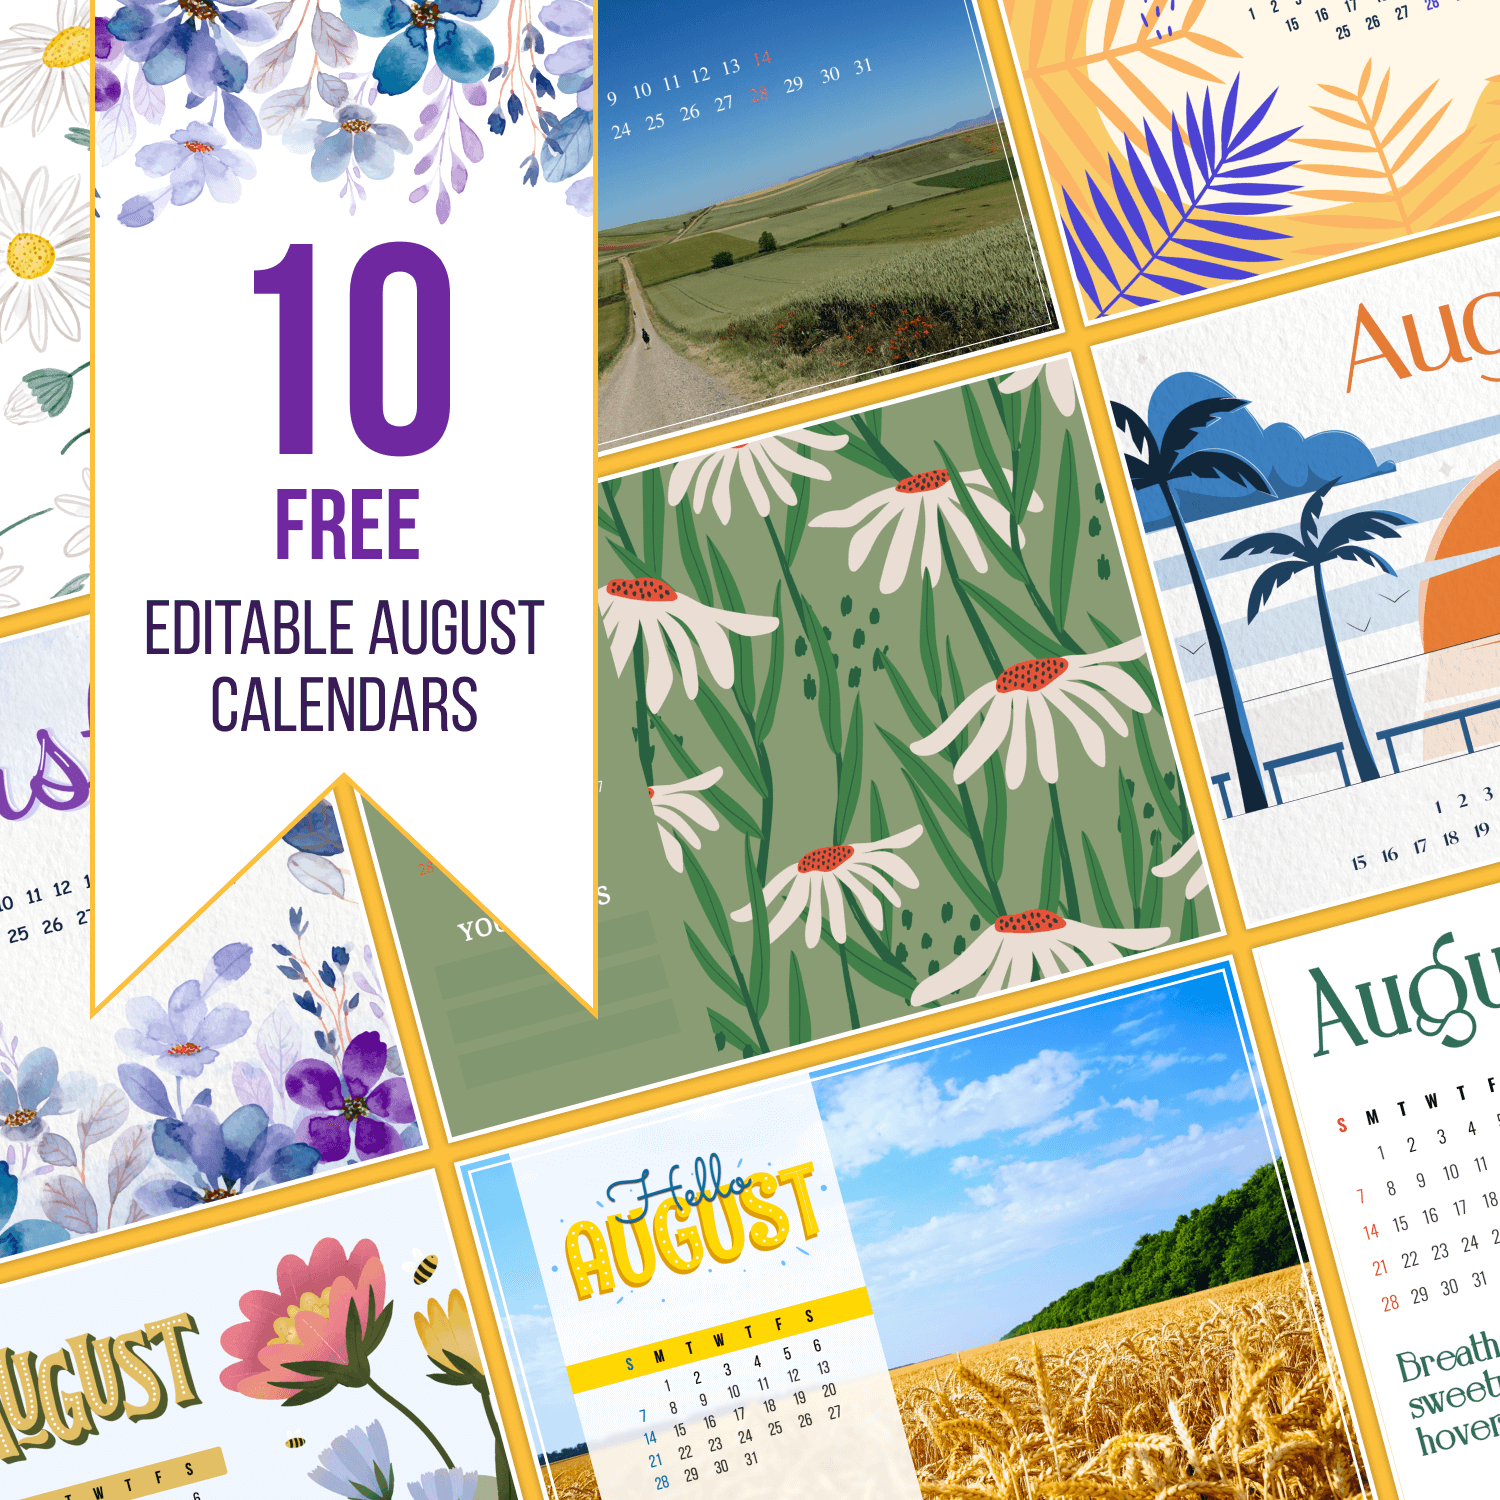 Free Chamomile August Fully Editable Printable Calendar MasterBundles